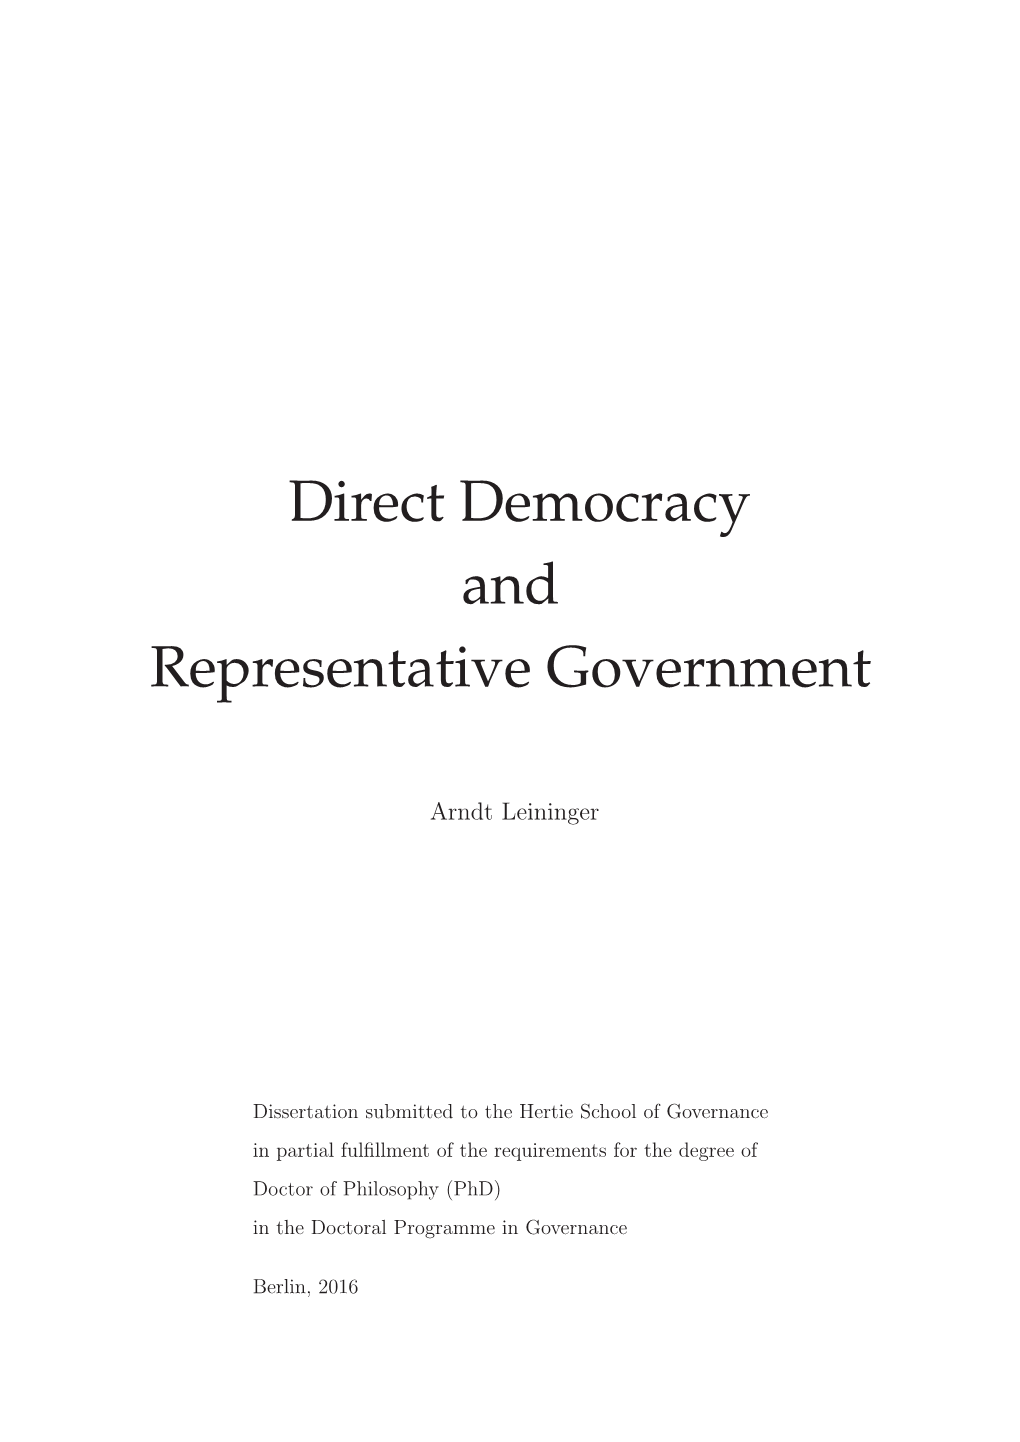 Direct Democracy and Representative Government